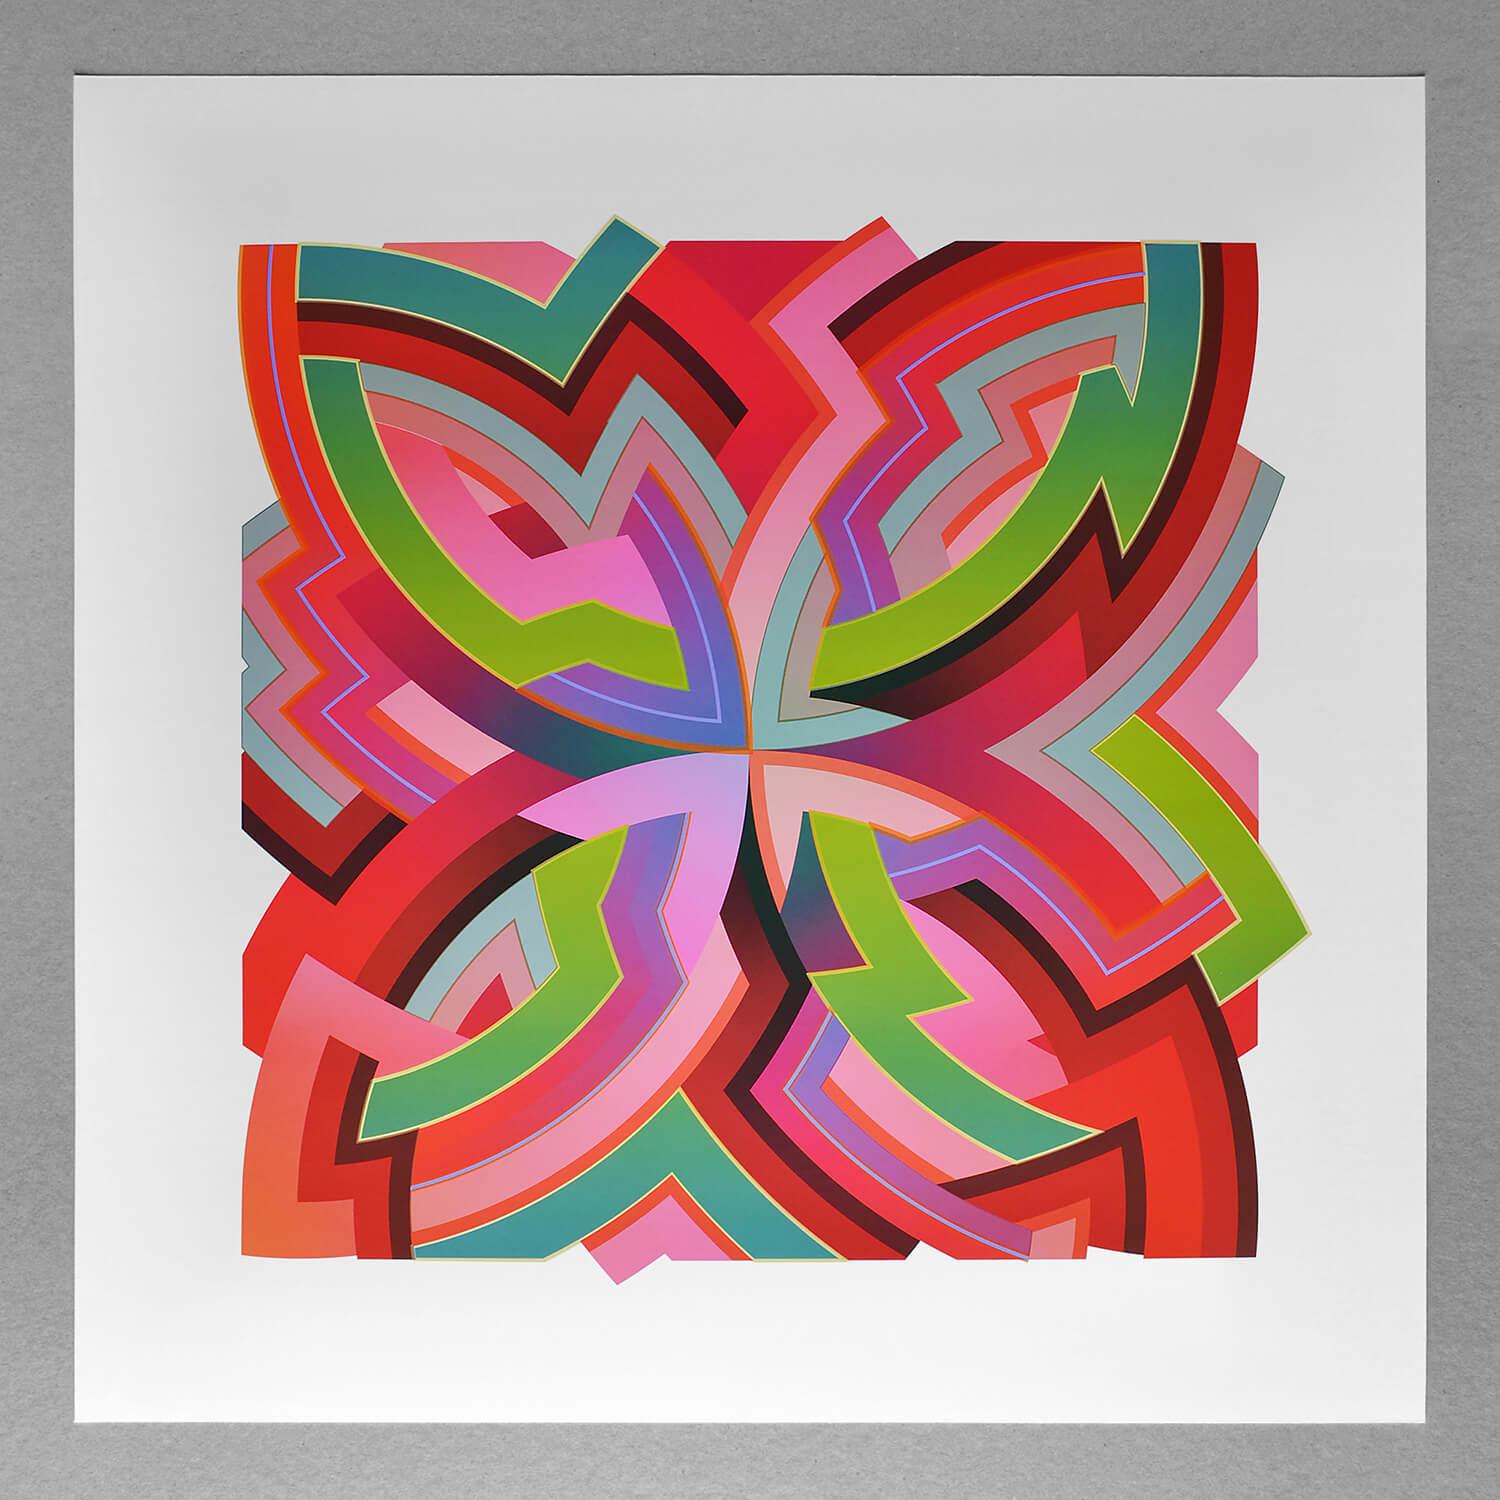 Chuck Elliott Abstract Print – interStella / Quad 1 pt2